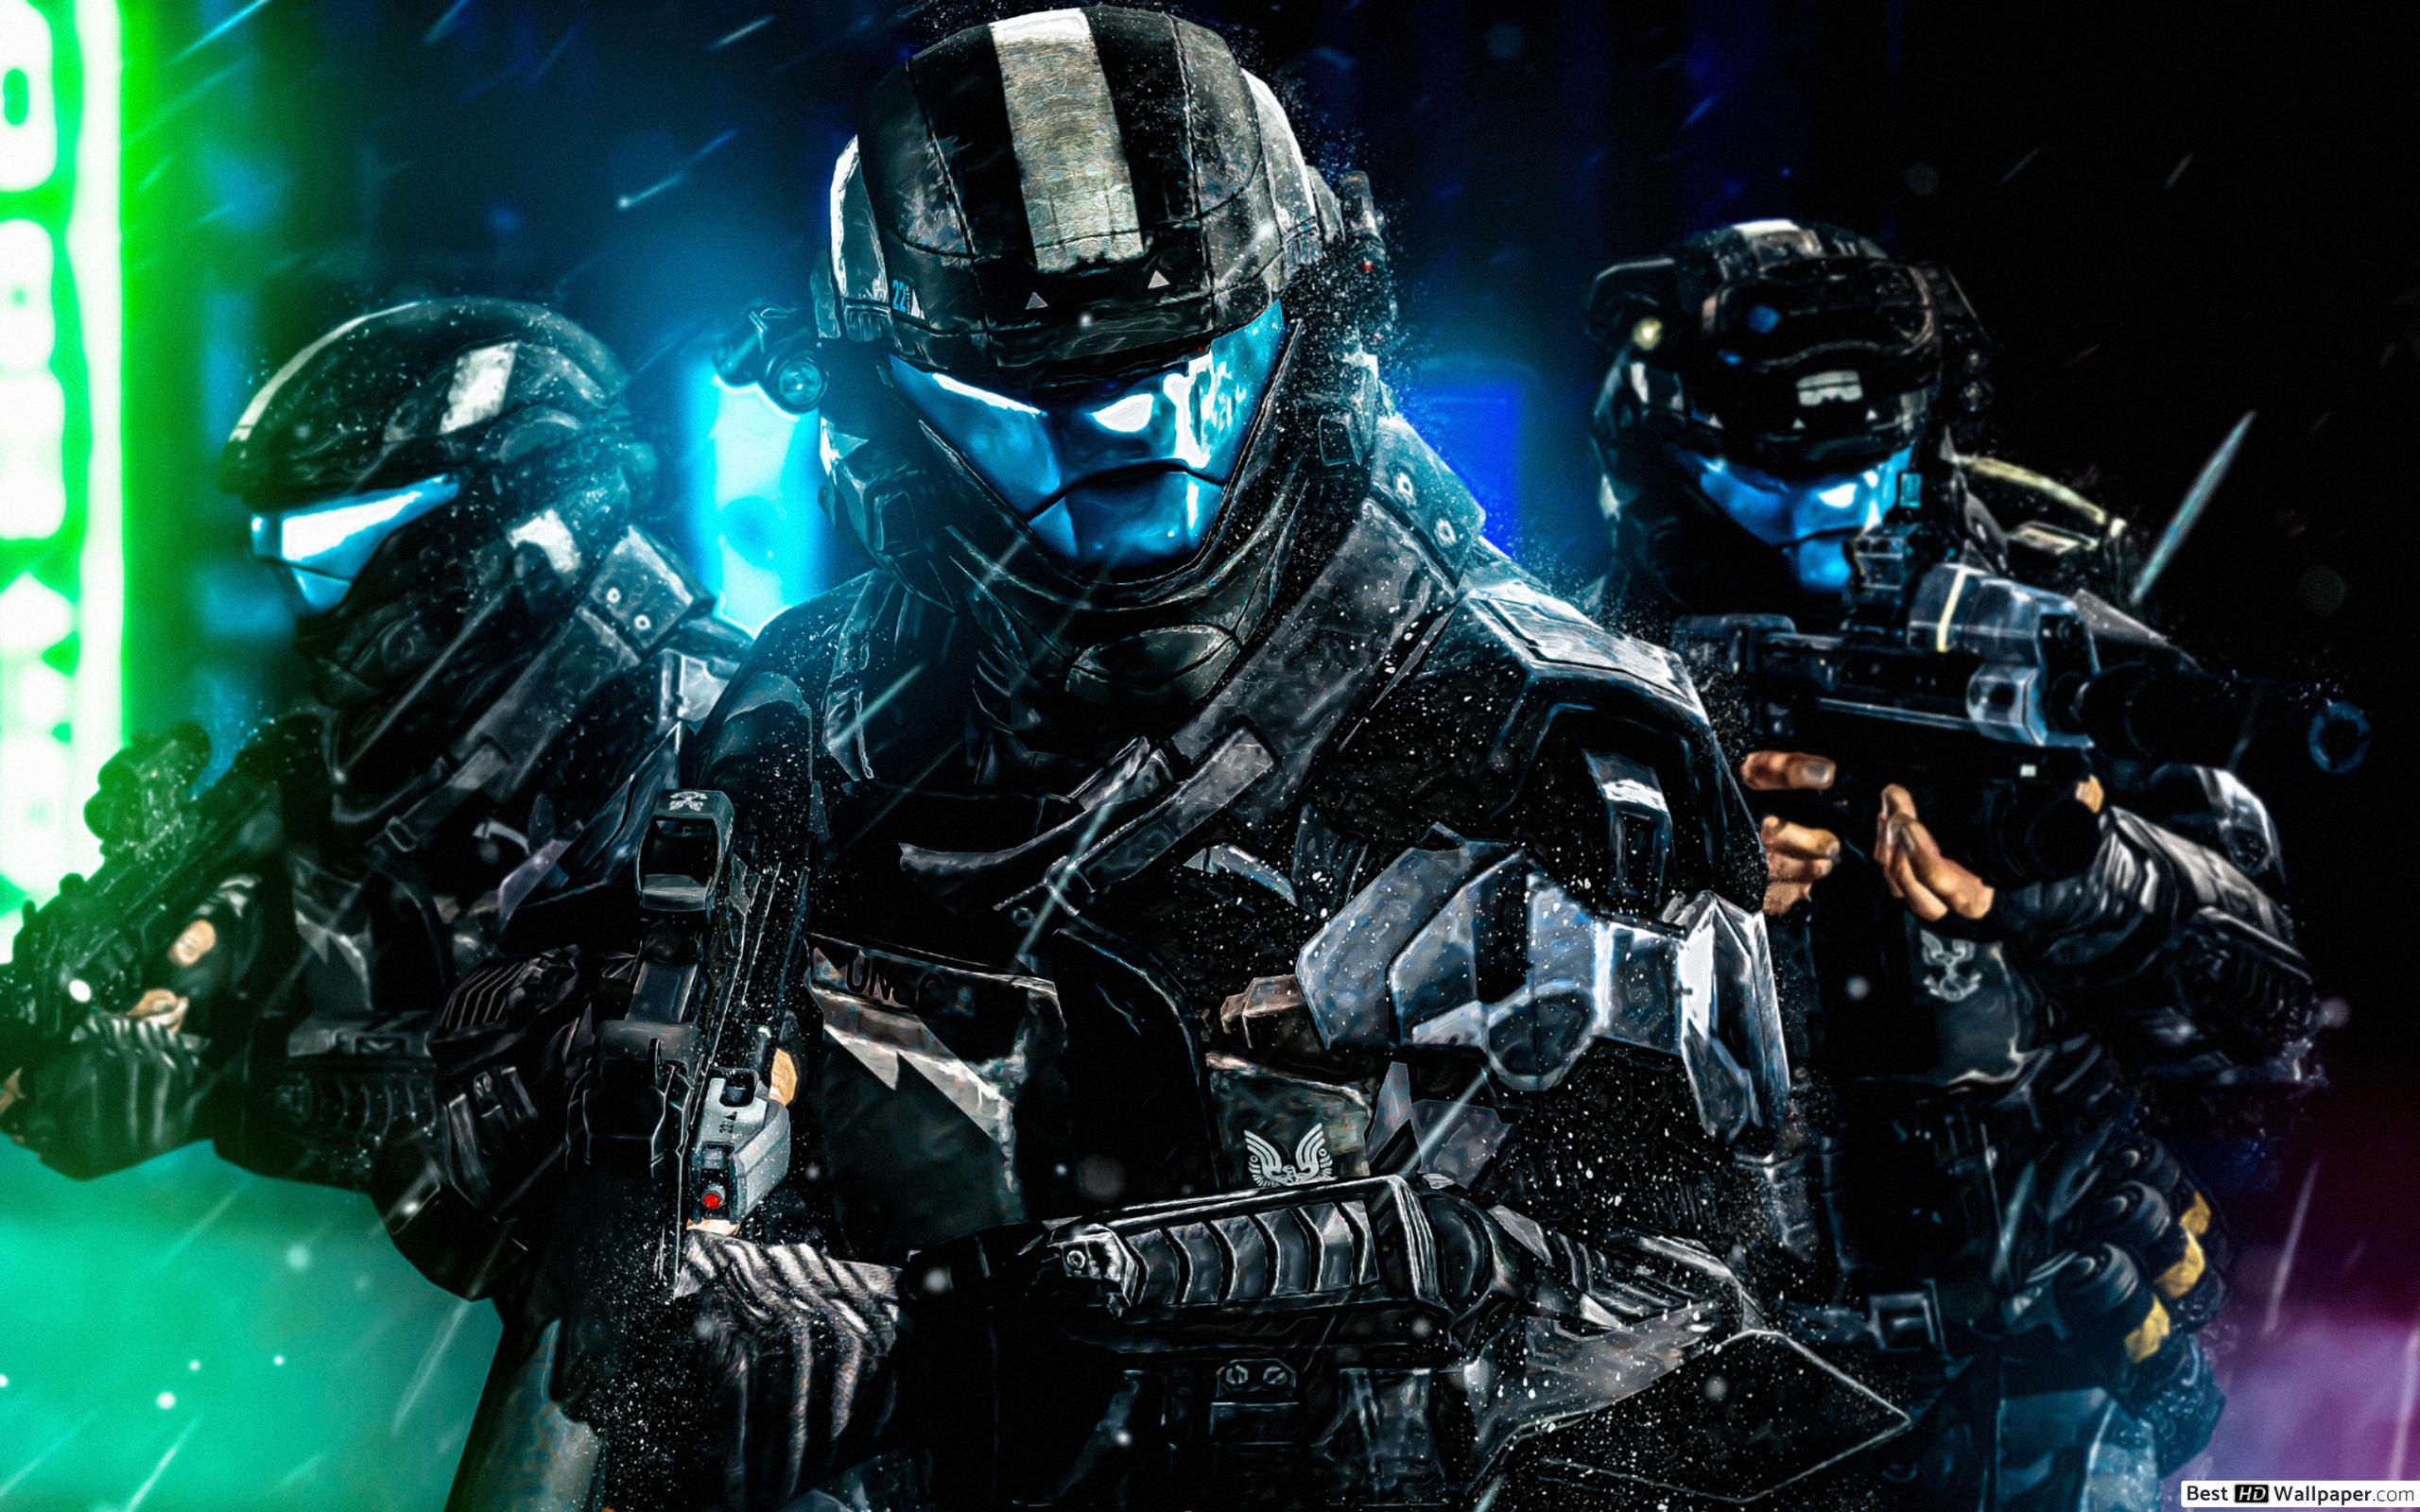 Halo 3: ODST (Orbital Drop Shock Troopers) Squad HD wallpaper download